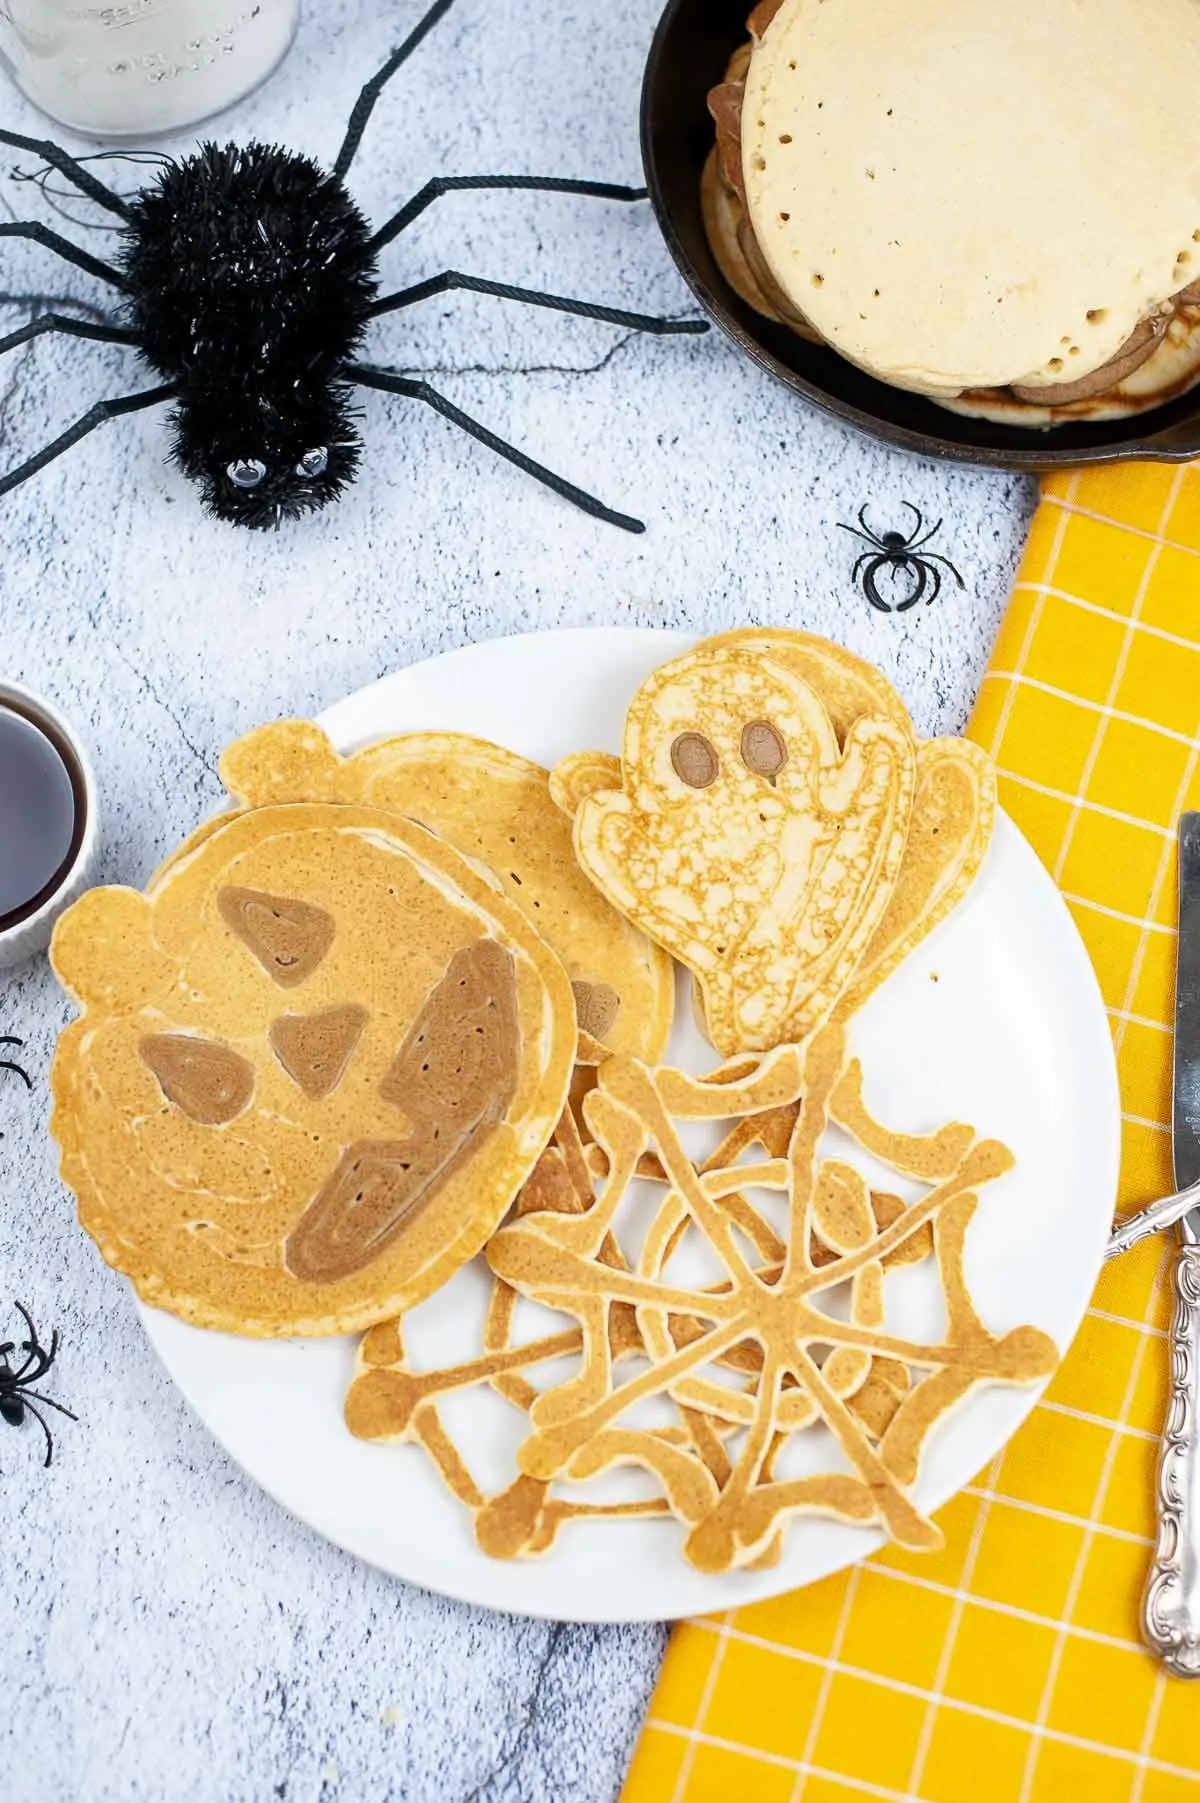 Halloween breakfast plate with Halloween shaped pancakes.